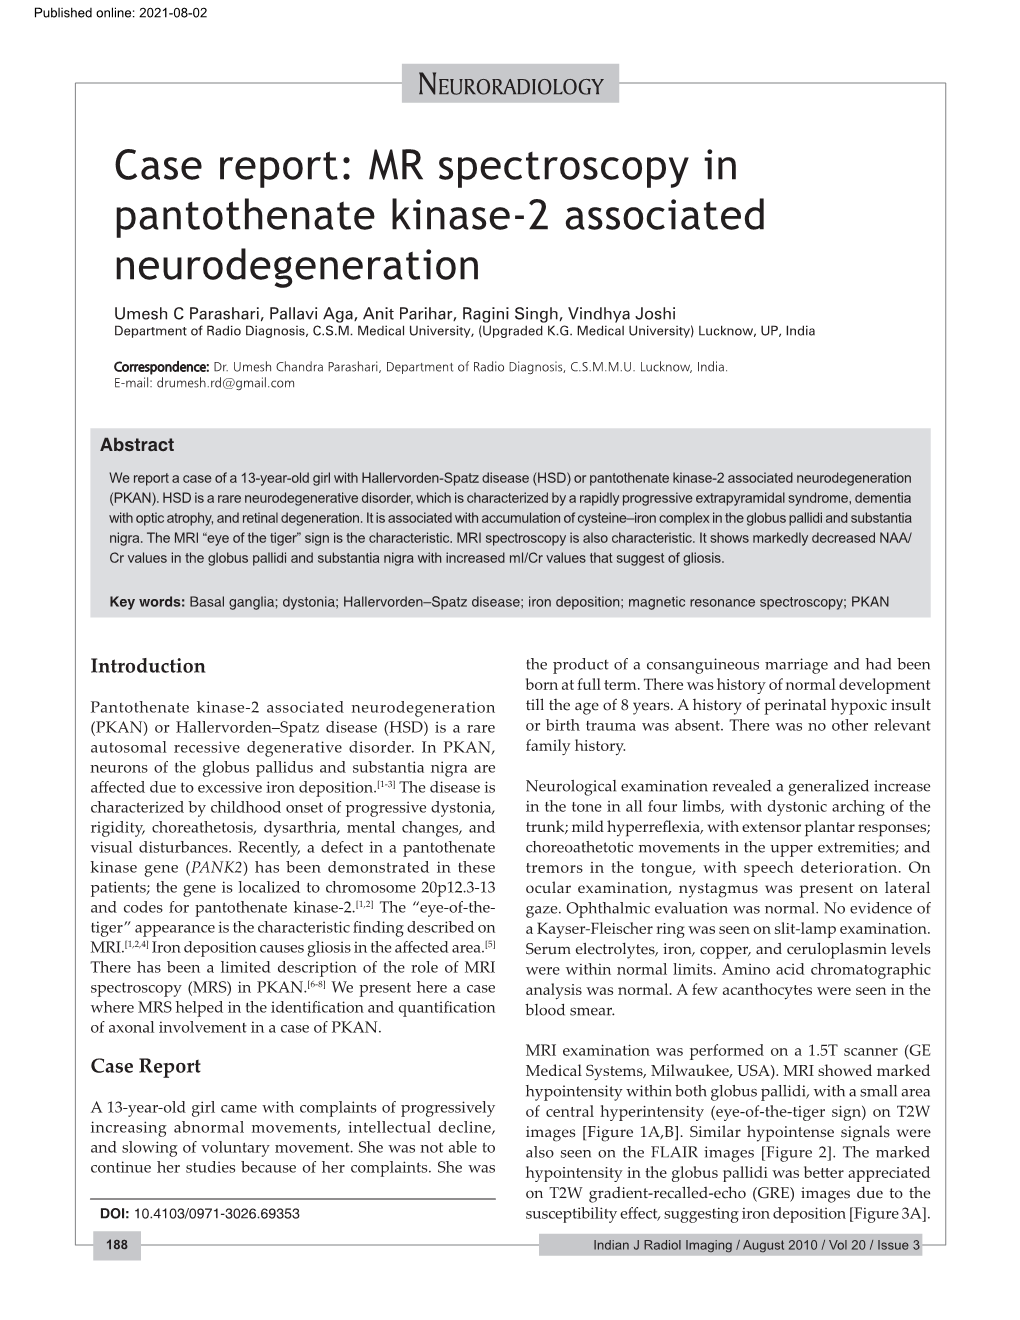 MR Spectroscopy in Pantothenate Kinase-2 Associated Neurodegeneration